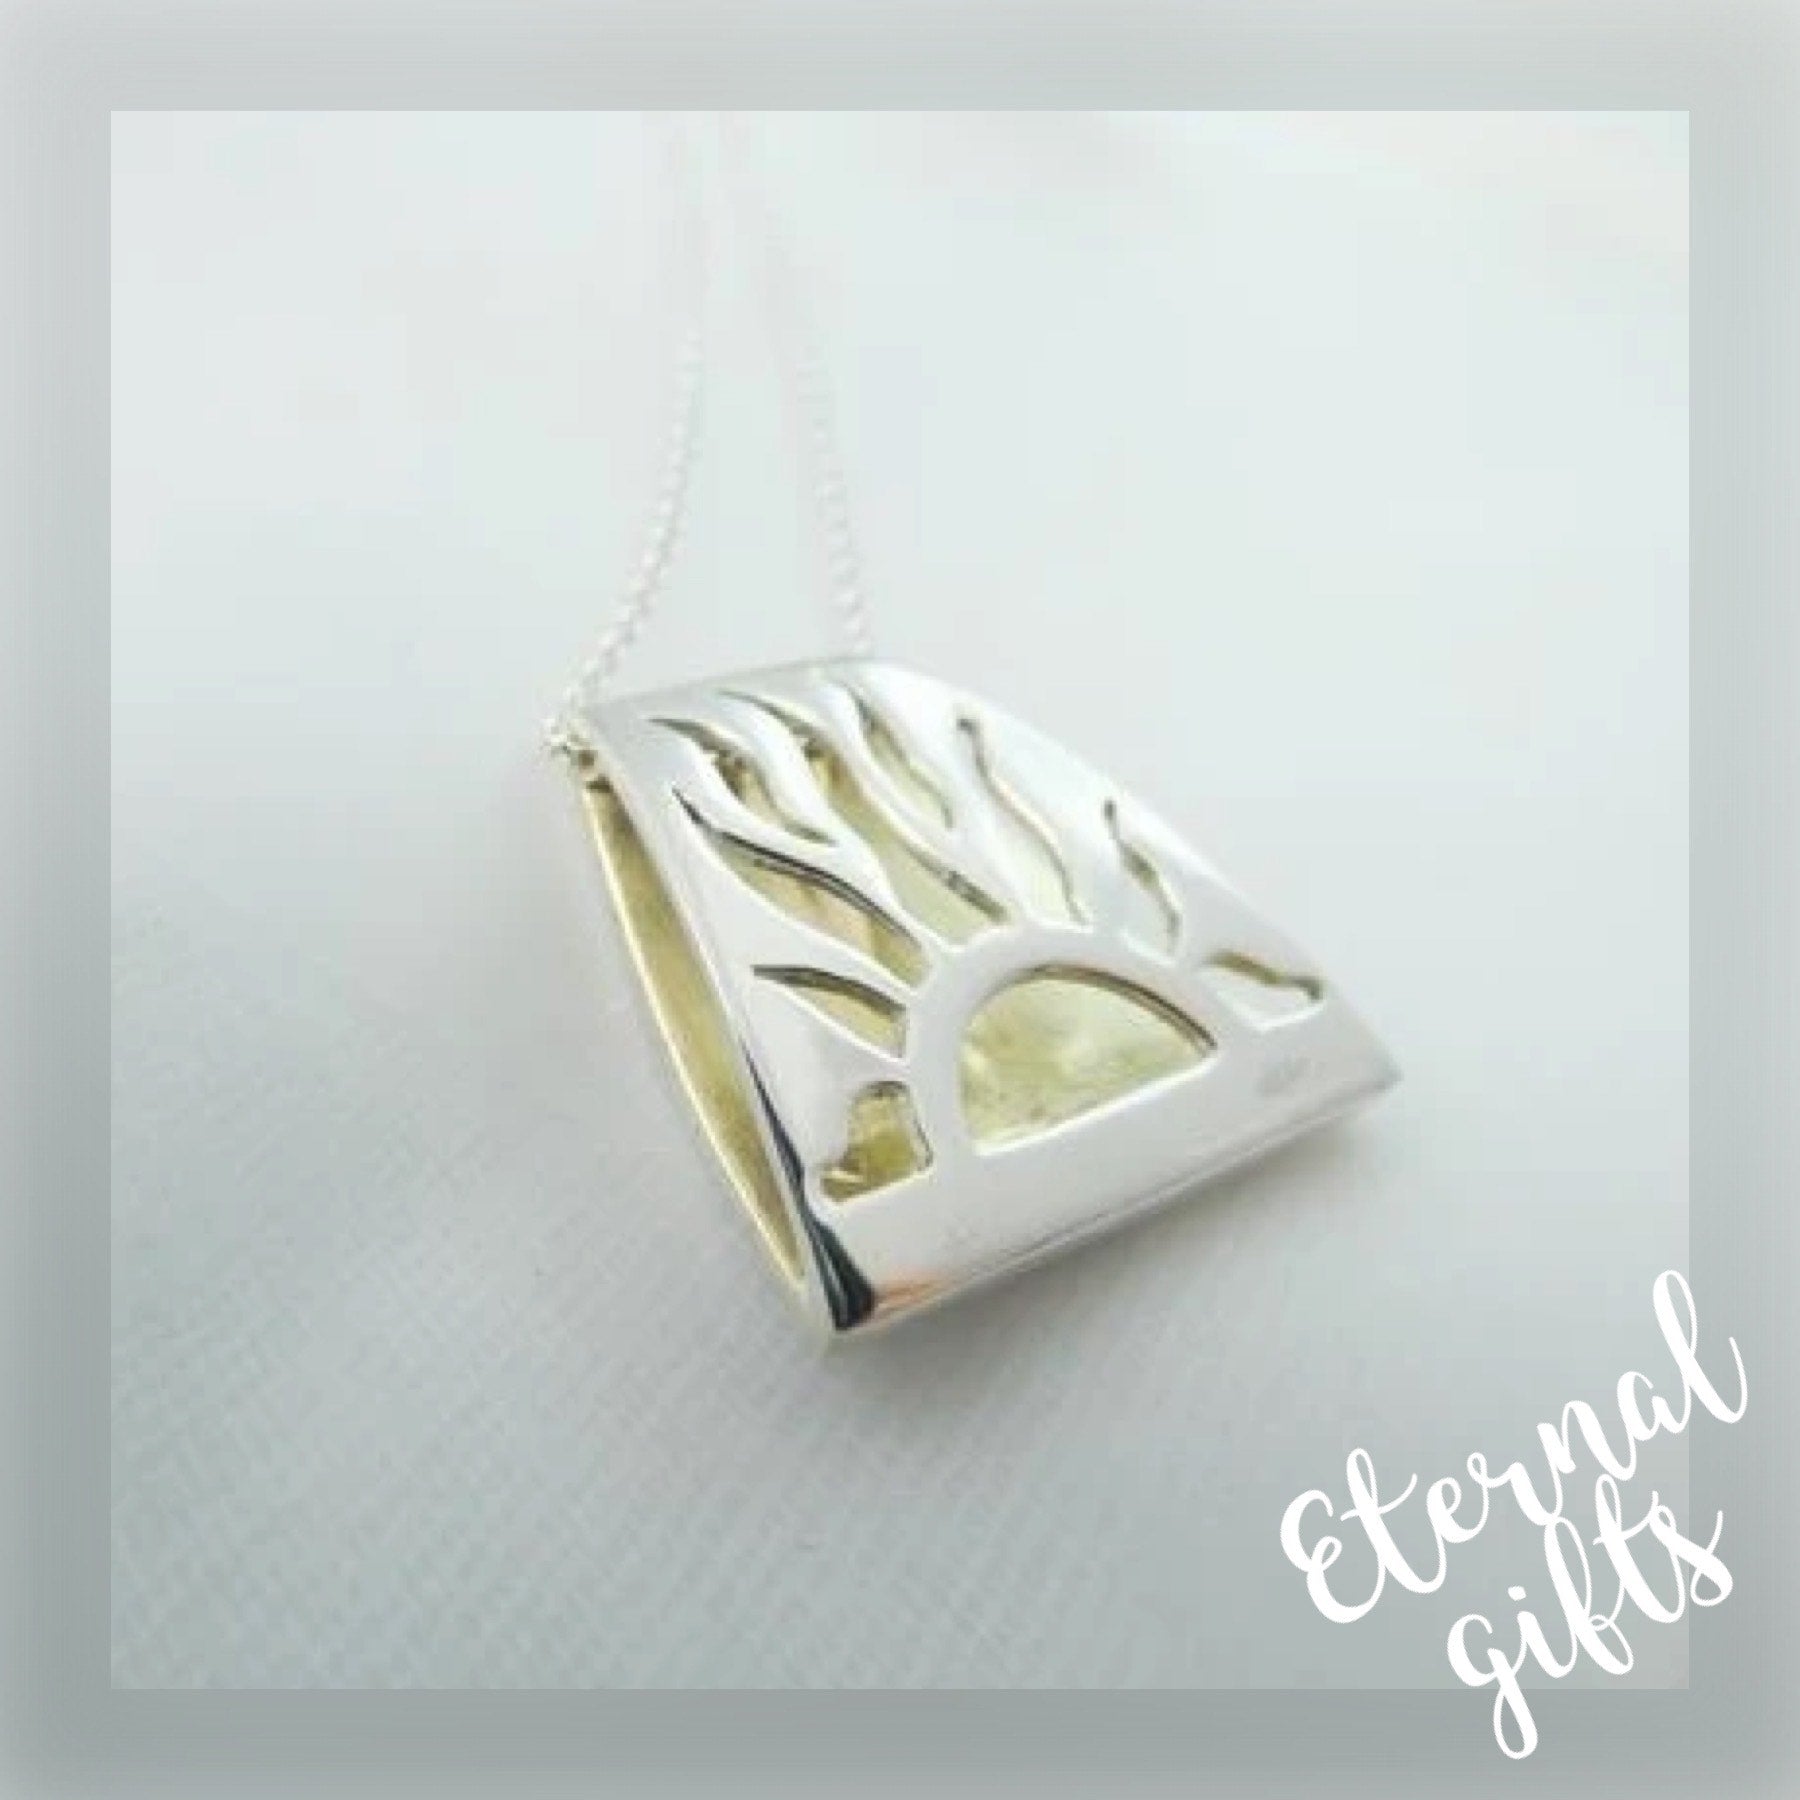 Lughnasa Pendant, Sterling Silver Sun Pendant, Elemental Jewellery by Banshee Silver